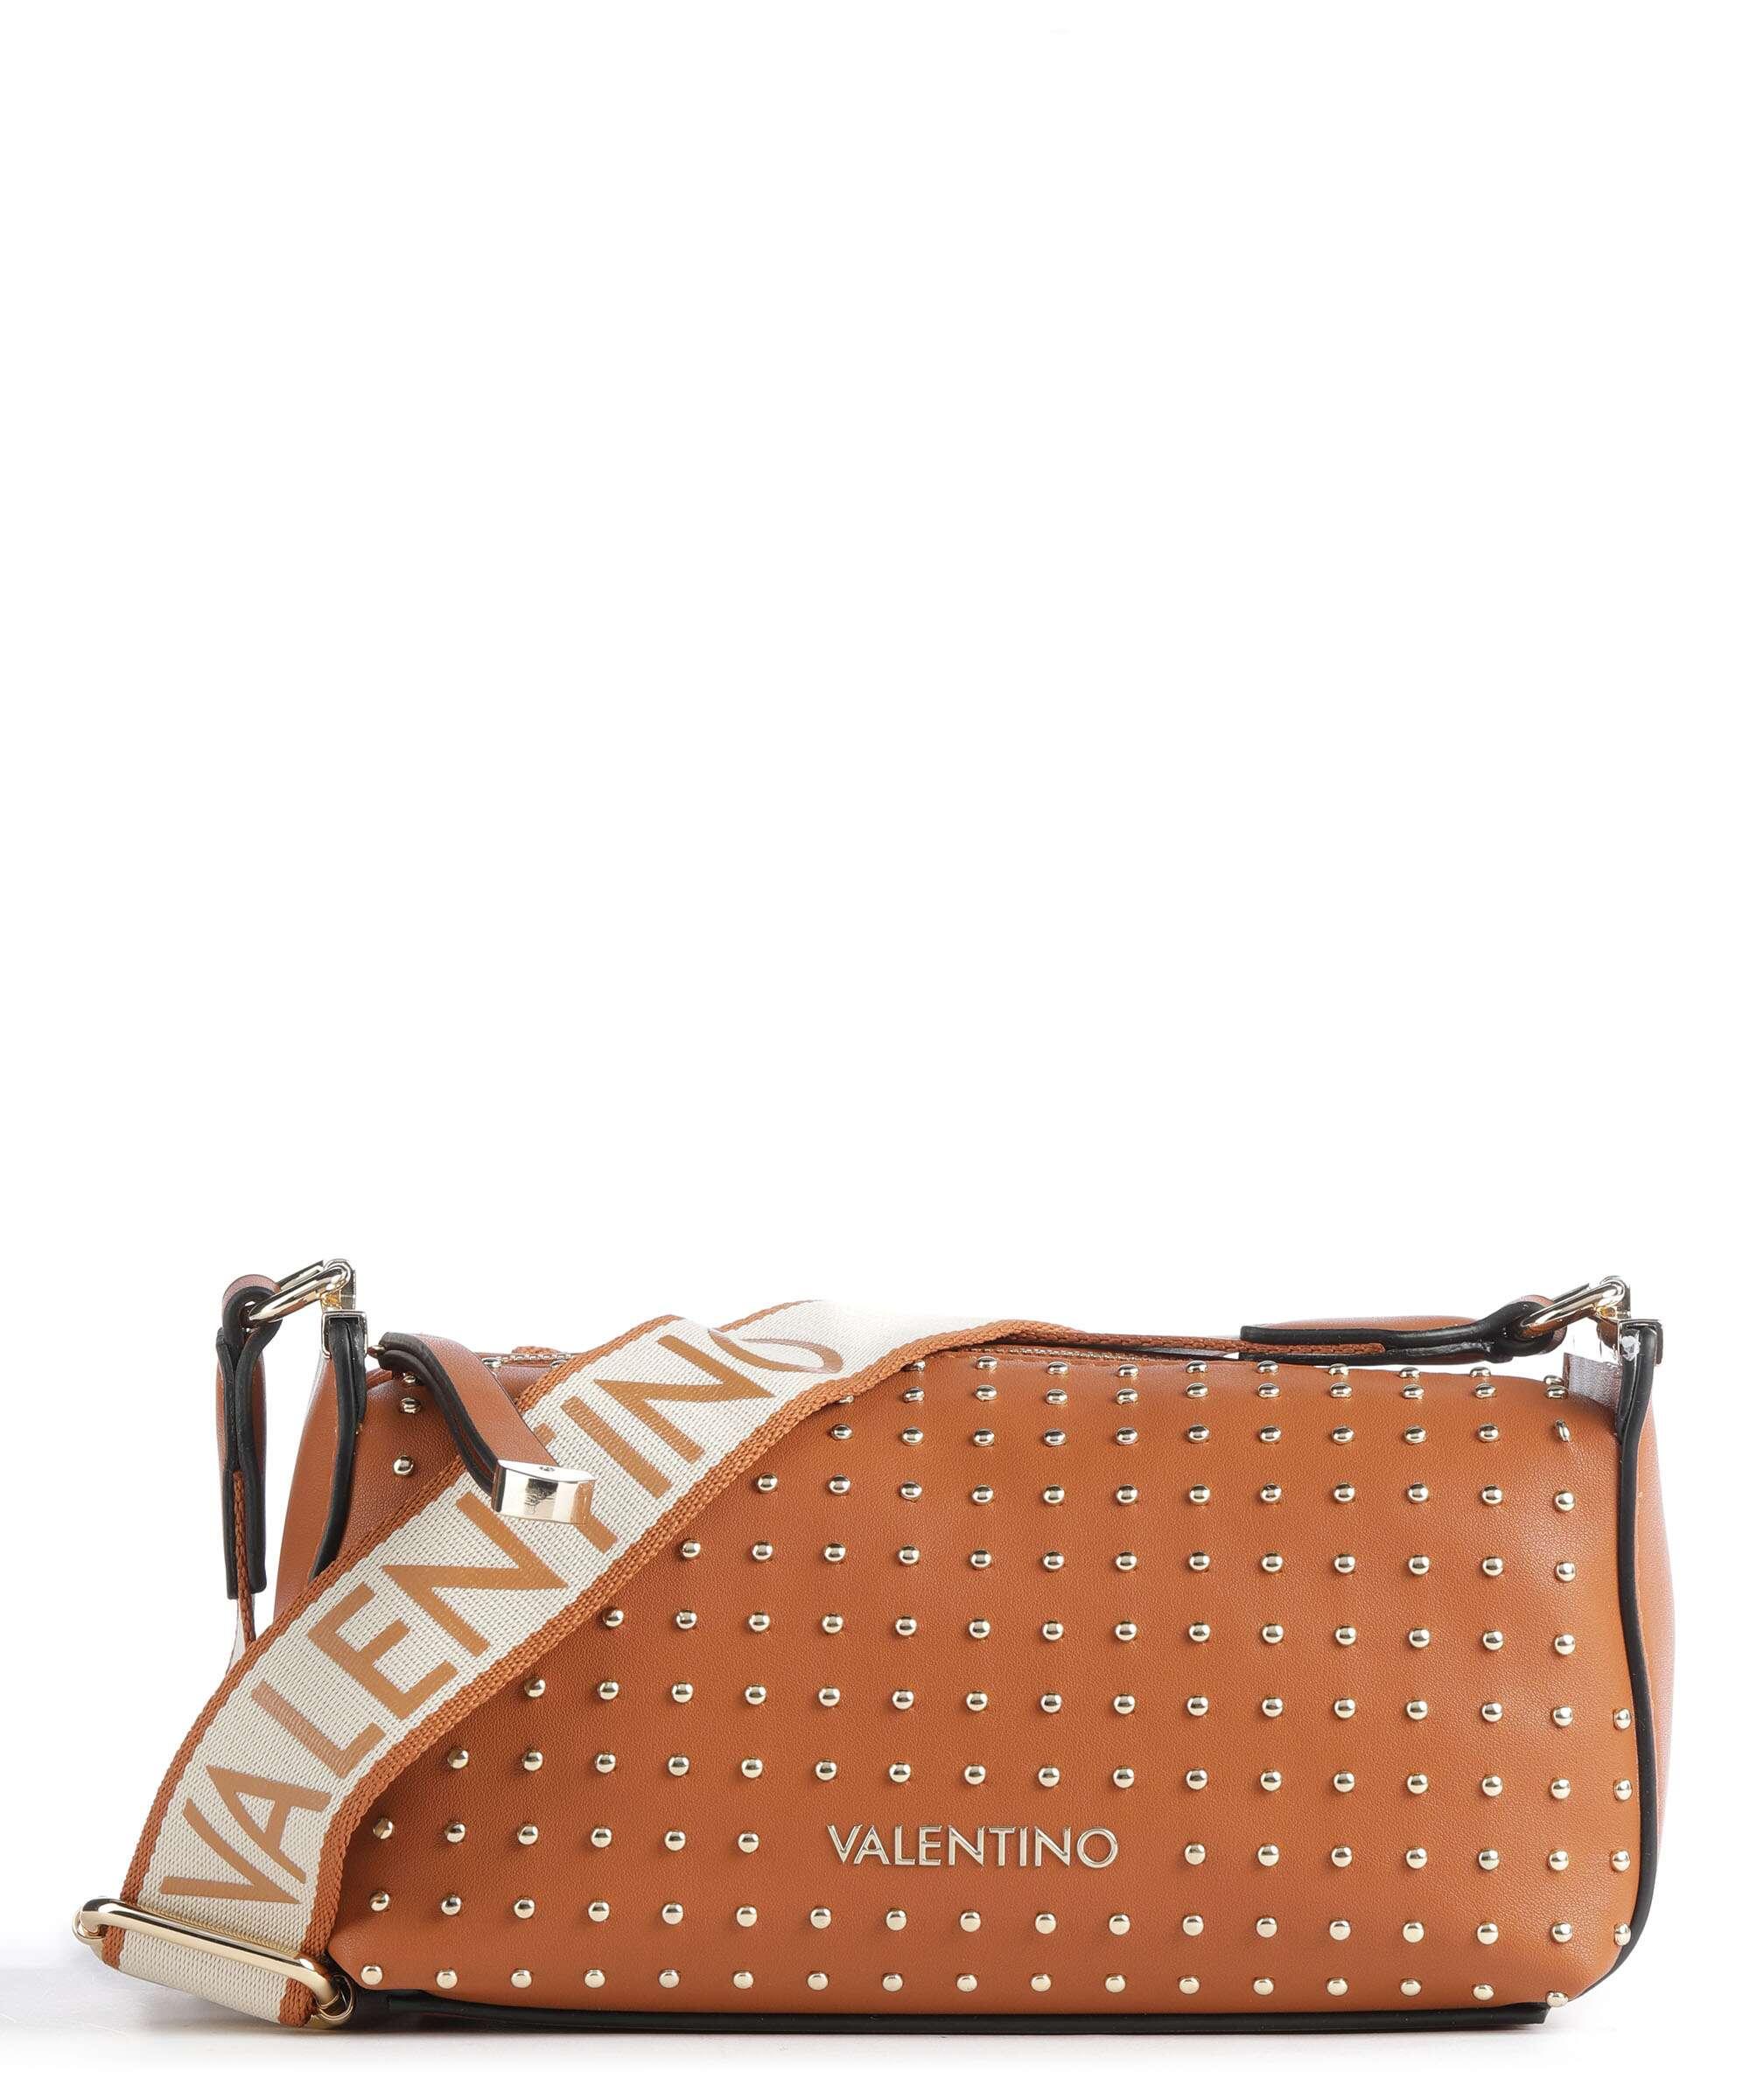 Valentino Bags & Handbags for Women | Authenticity Guaranteed | eBay